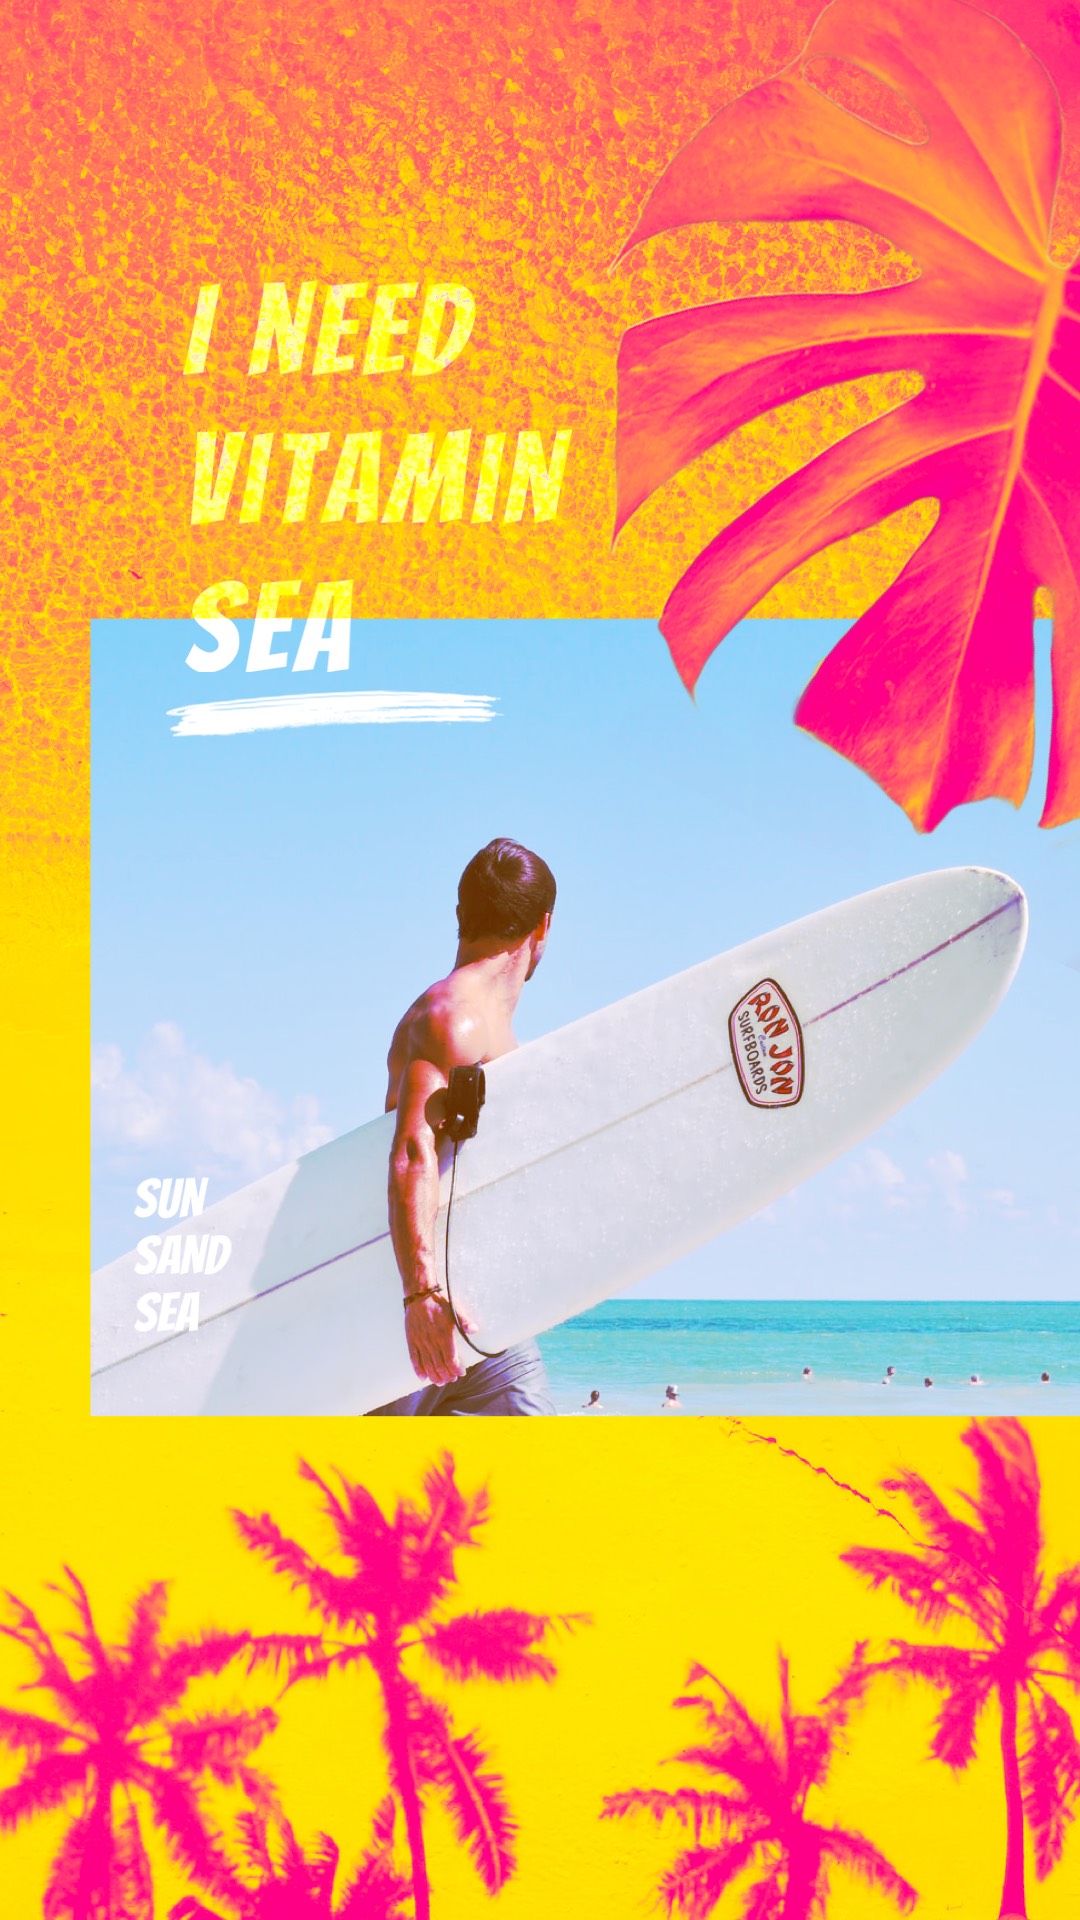 I need vitamin sea man holding surfboard summer story template